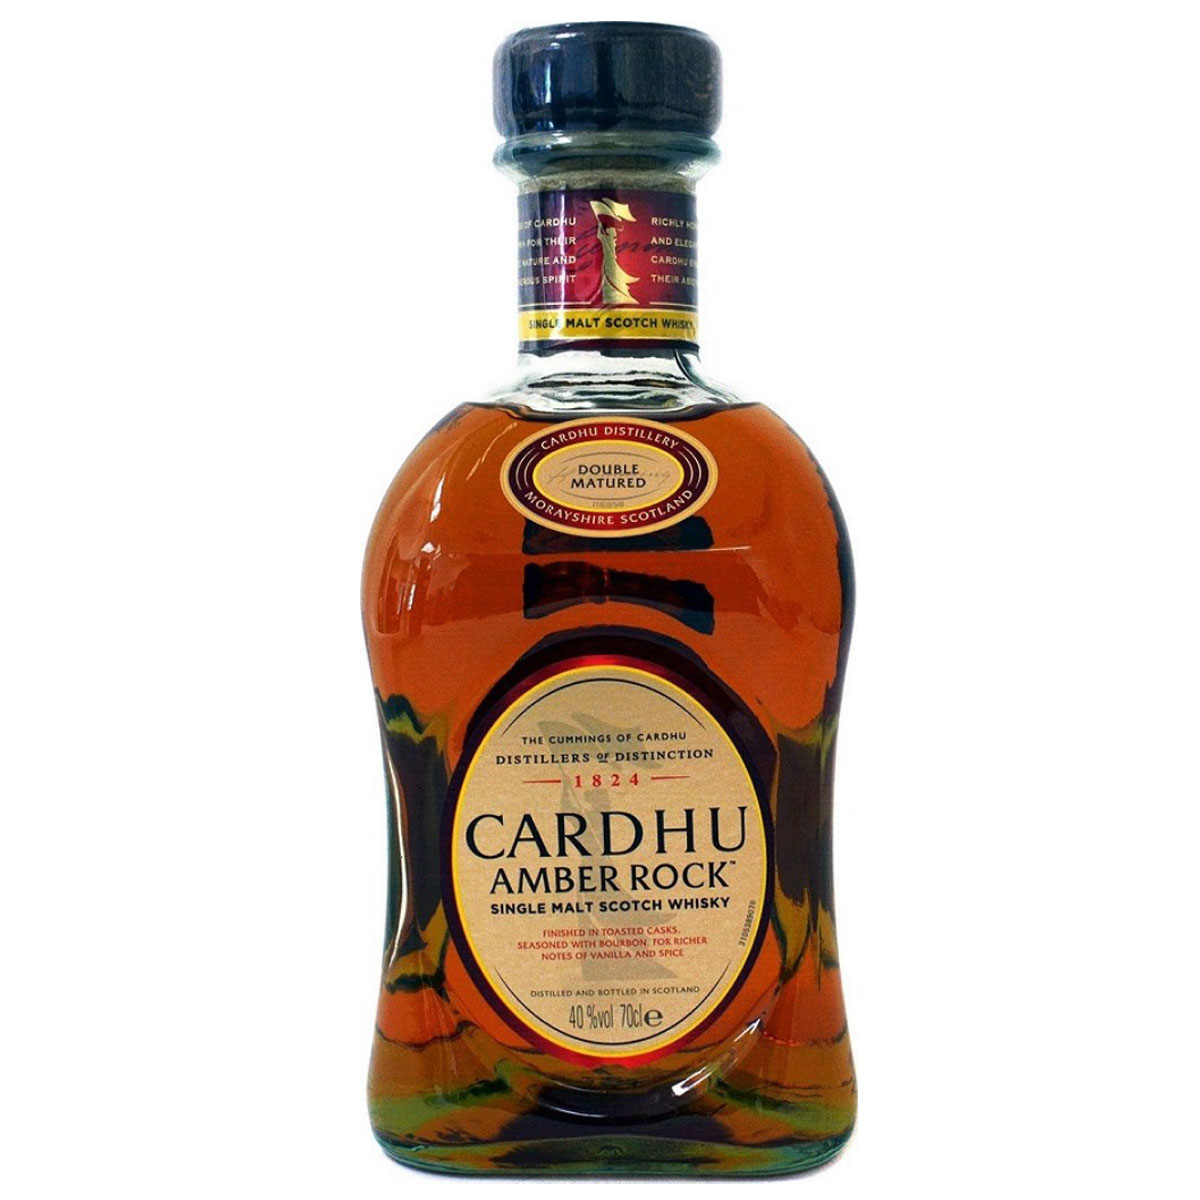 a bottle of cardhu amber rock